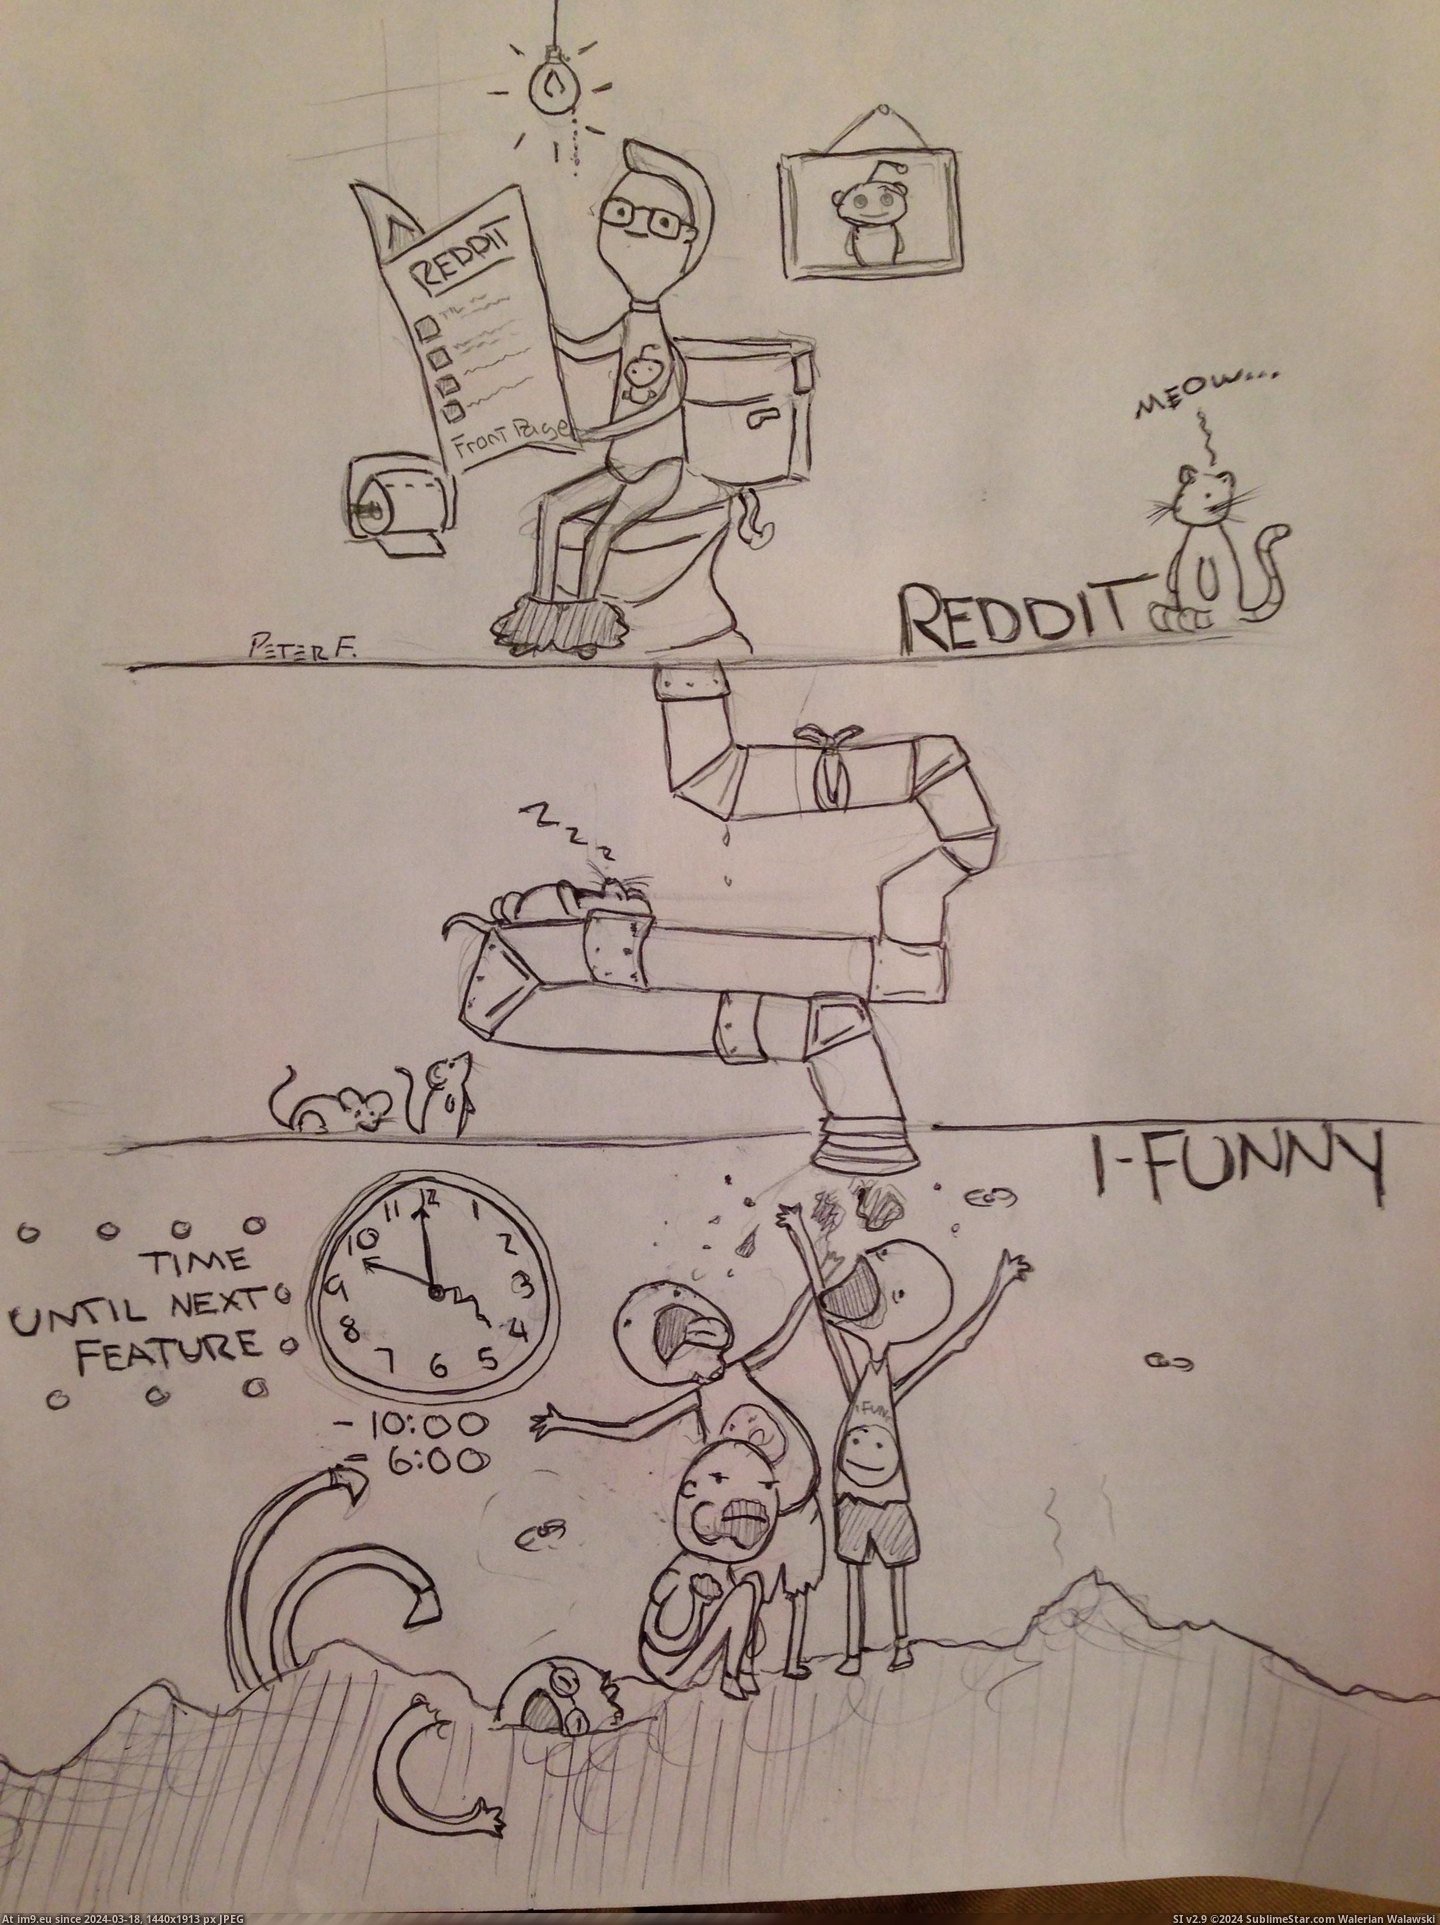 #Funny #Hope #Drew #Noticed #Ifunny #Likes #Cartoon [Funny] I drew a cartoon about what I noticed while on reddit and ifunny. I hope reddit likes it! Pic. (Изображение из альбом My r/FUNNY favs))